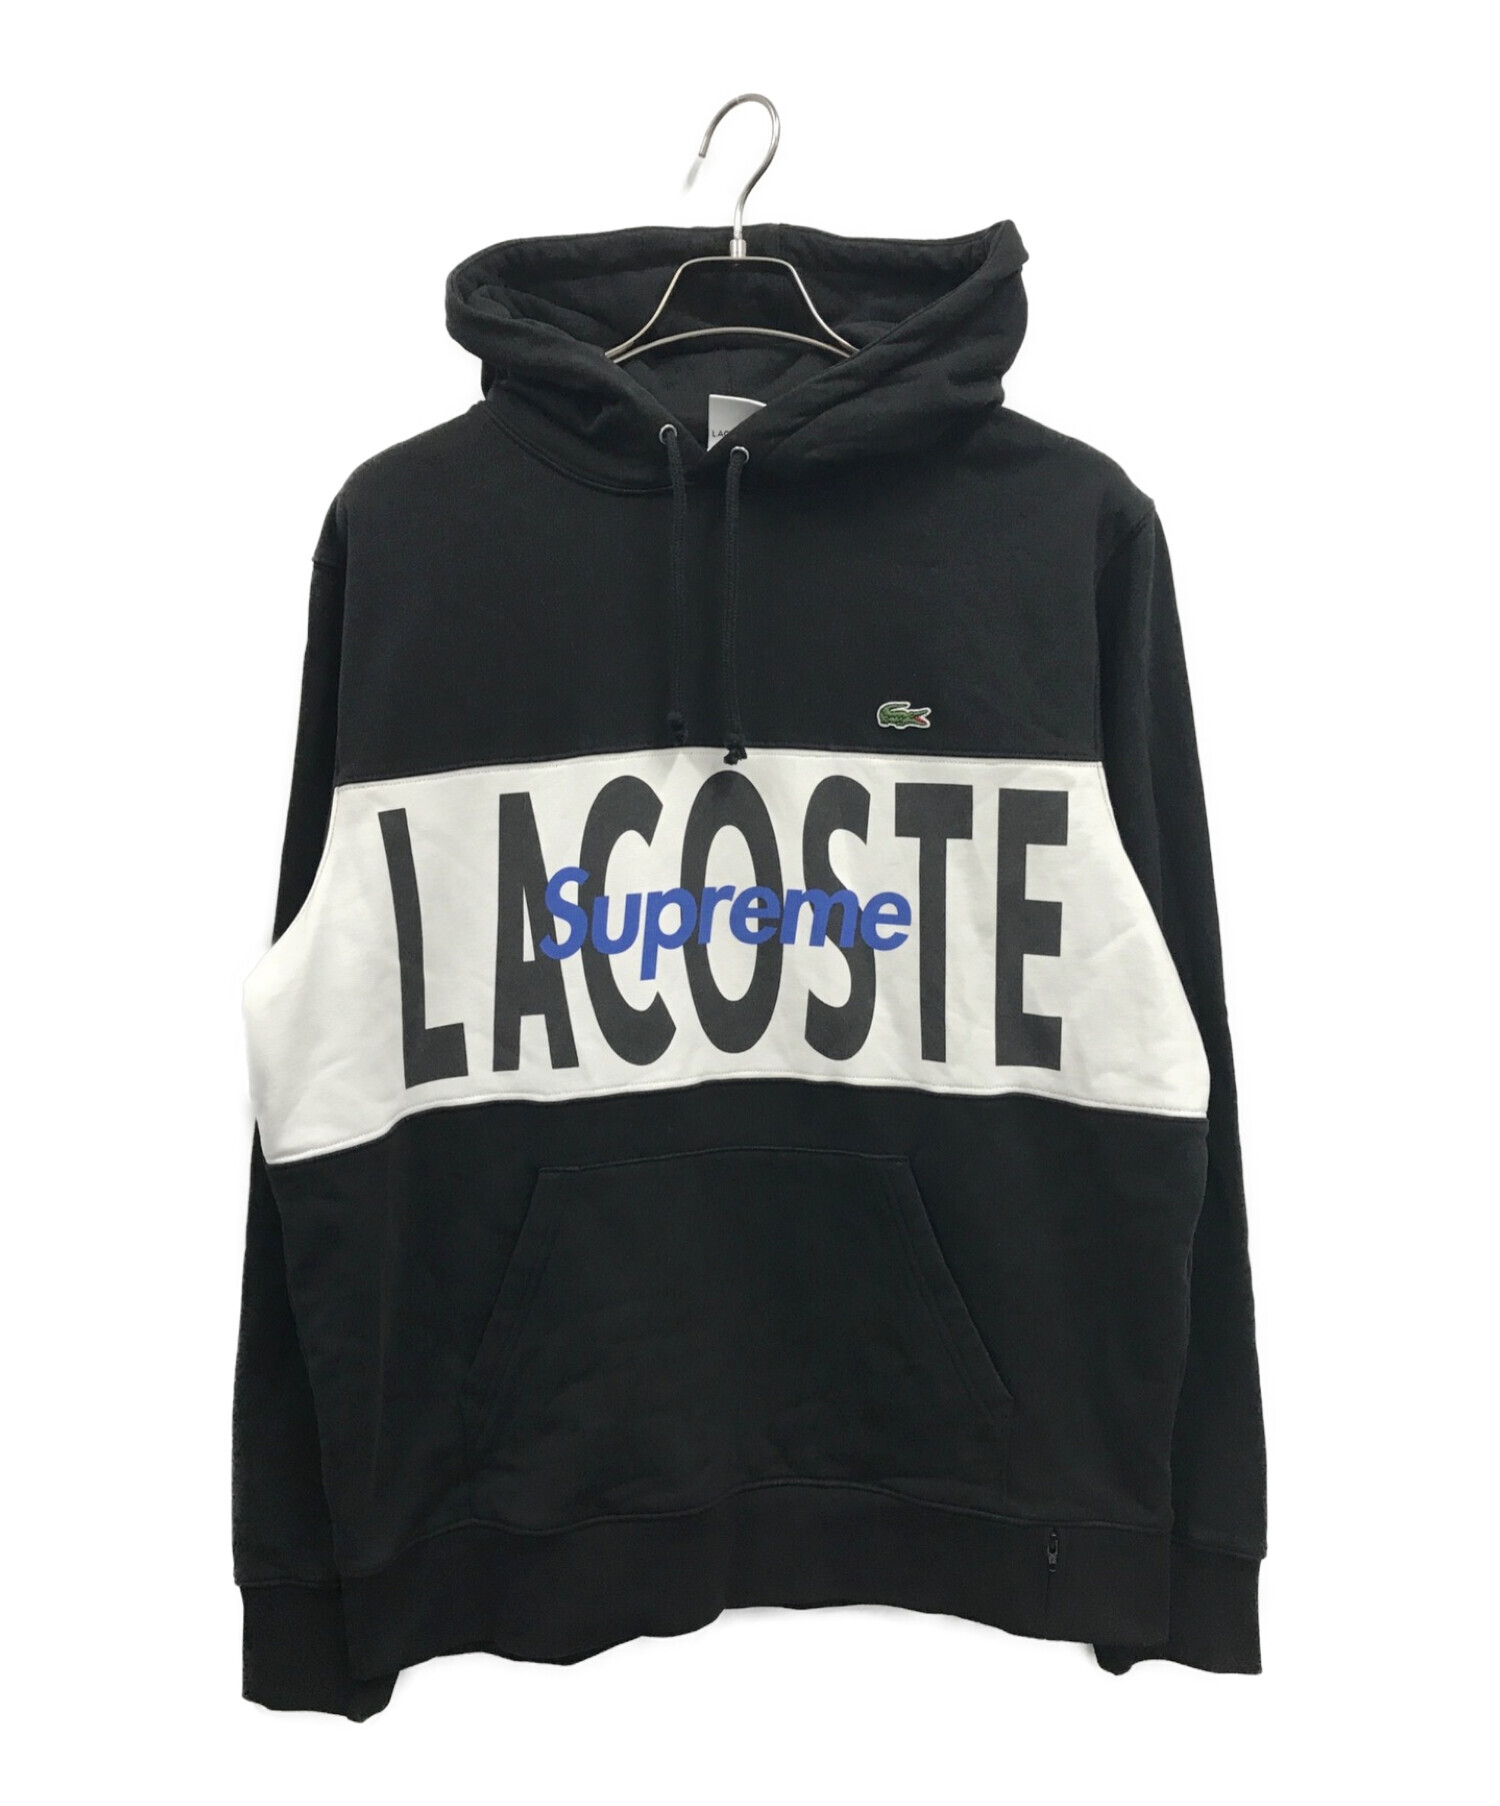 Mサイズ Supreme LACOSTE Hooded Sweatshirt - パーカー